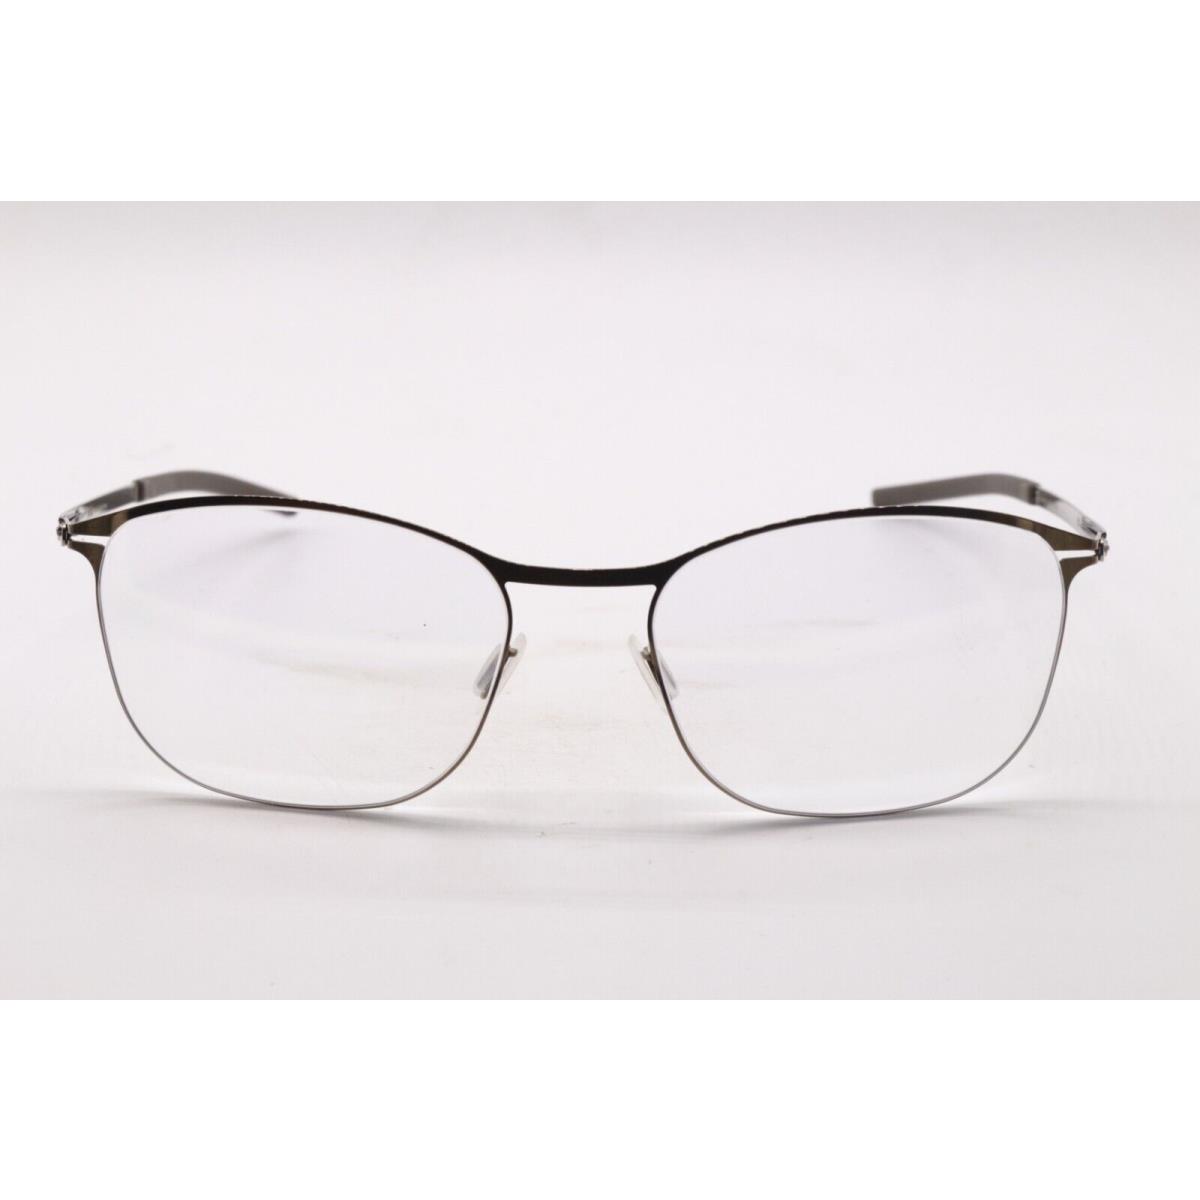 ic! berlin eyeglasses SAHEL - SHINY BRONZE Frame